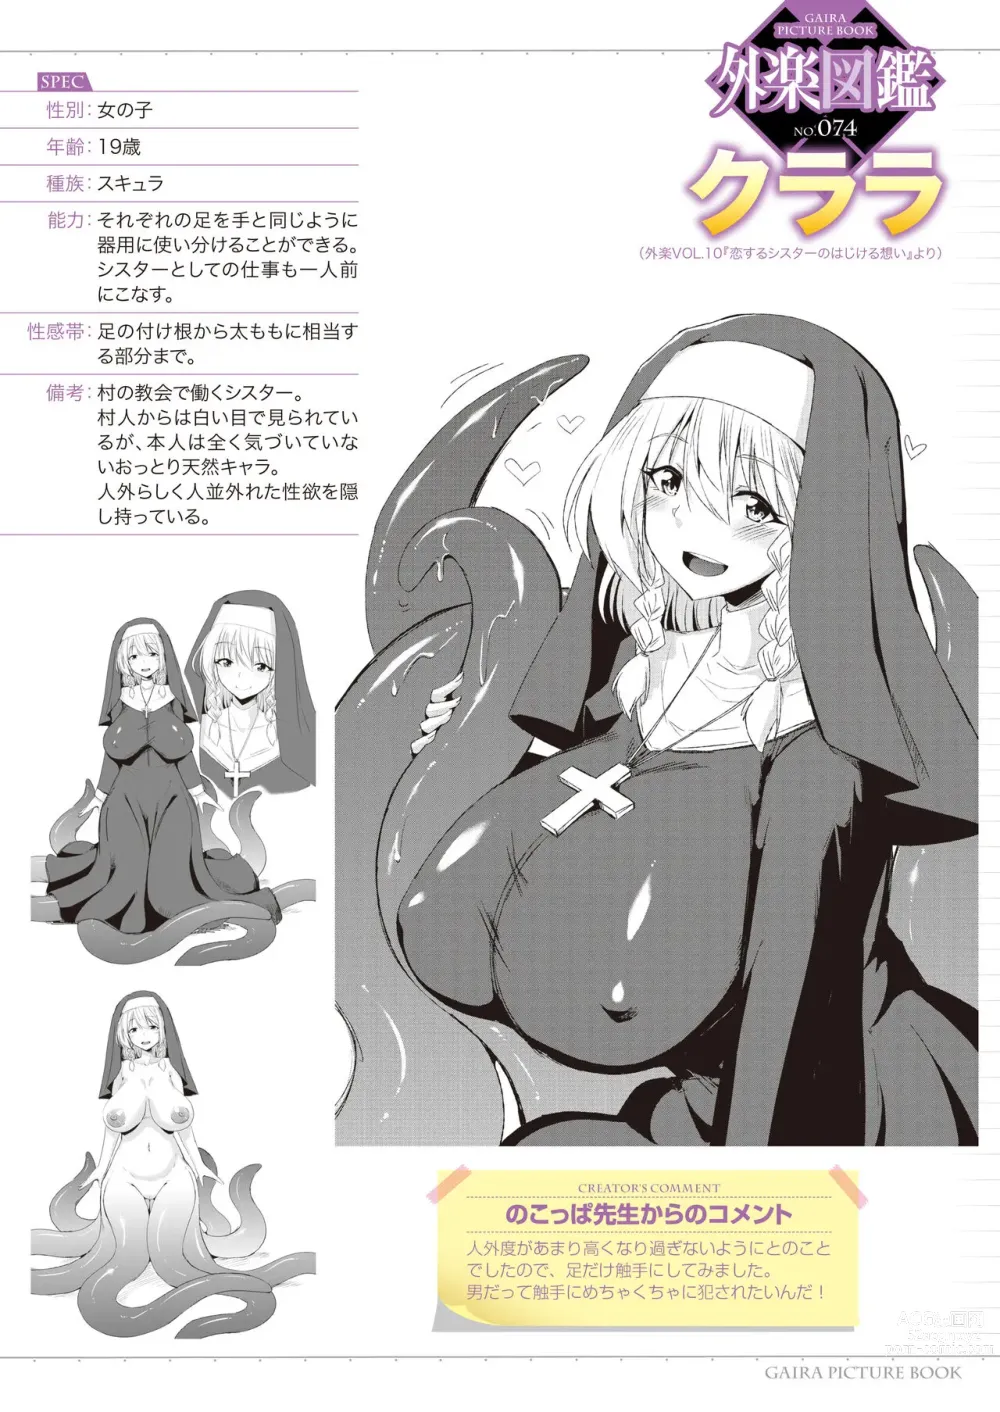 Page 6 of manga Gaira Zukan Vol. 10